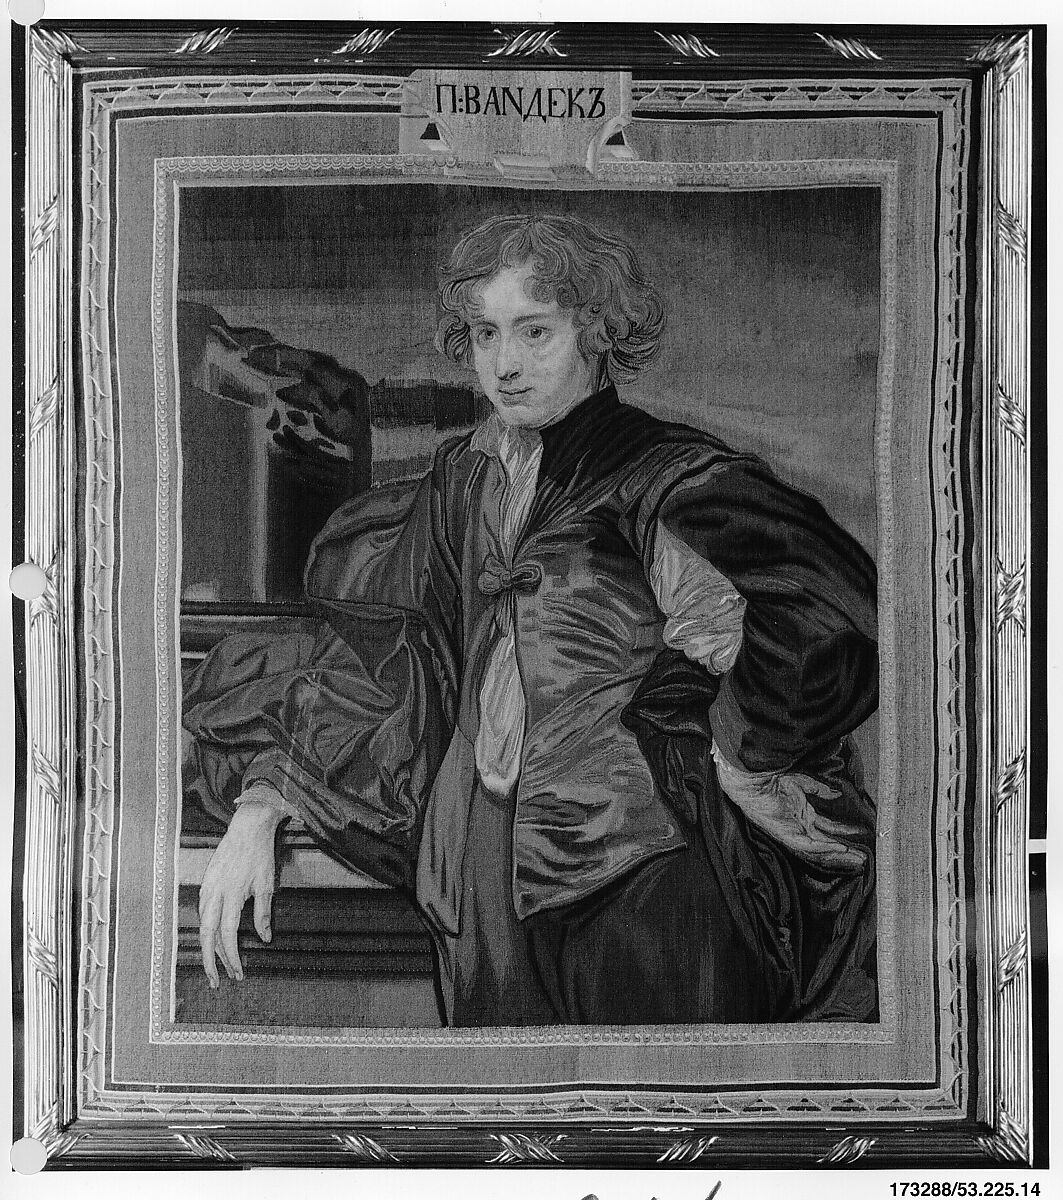 Anthony Van Dyck, Self Portrait, Imperial Russian Tapestry Manufactory, Saint Petersburg, Wool, metal thread (20-25 warps per inch, 8-10 per cm.), Russian, St. Petersburg 